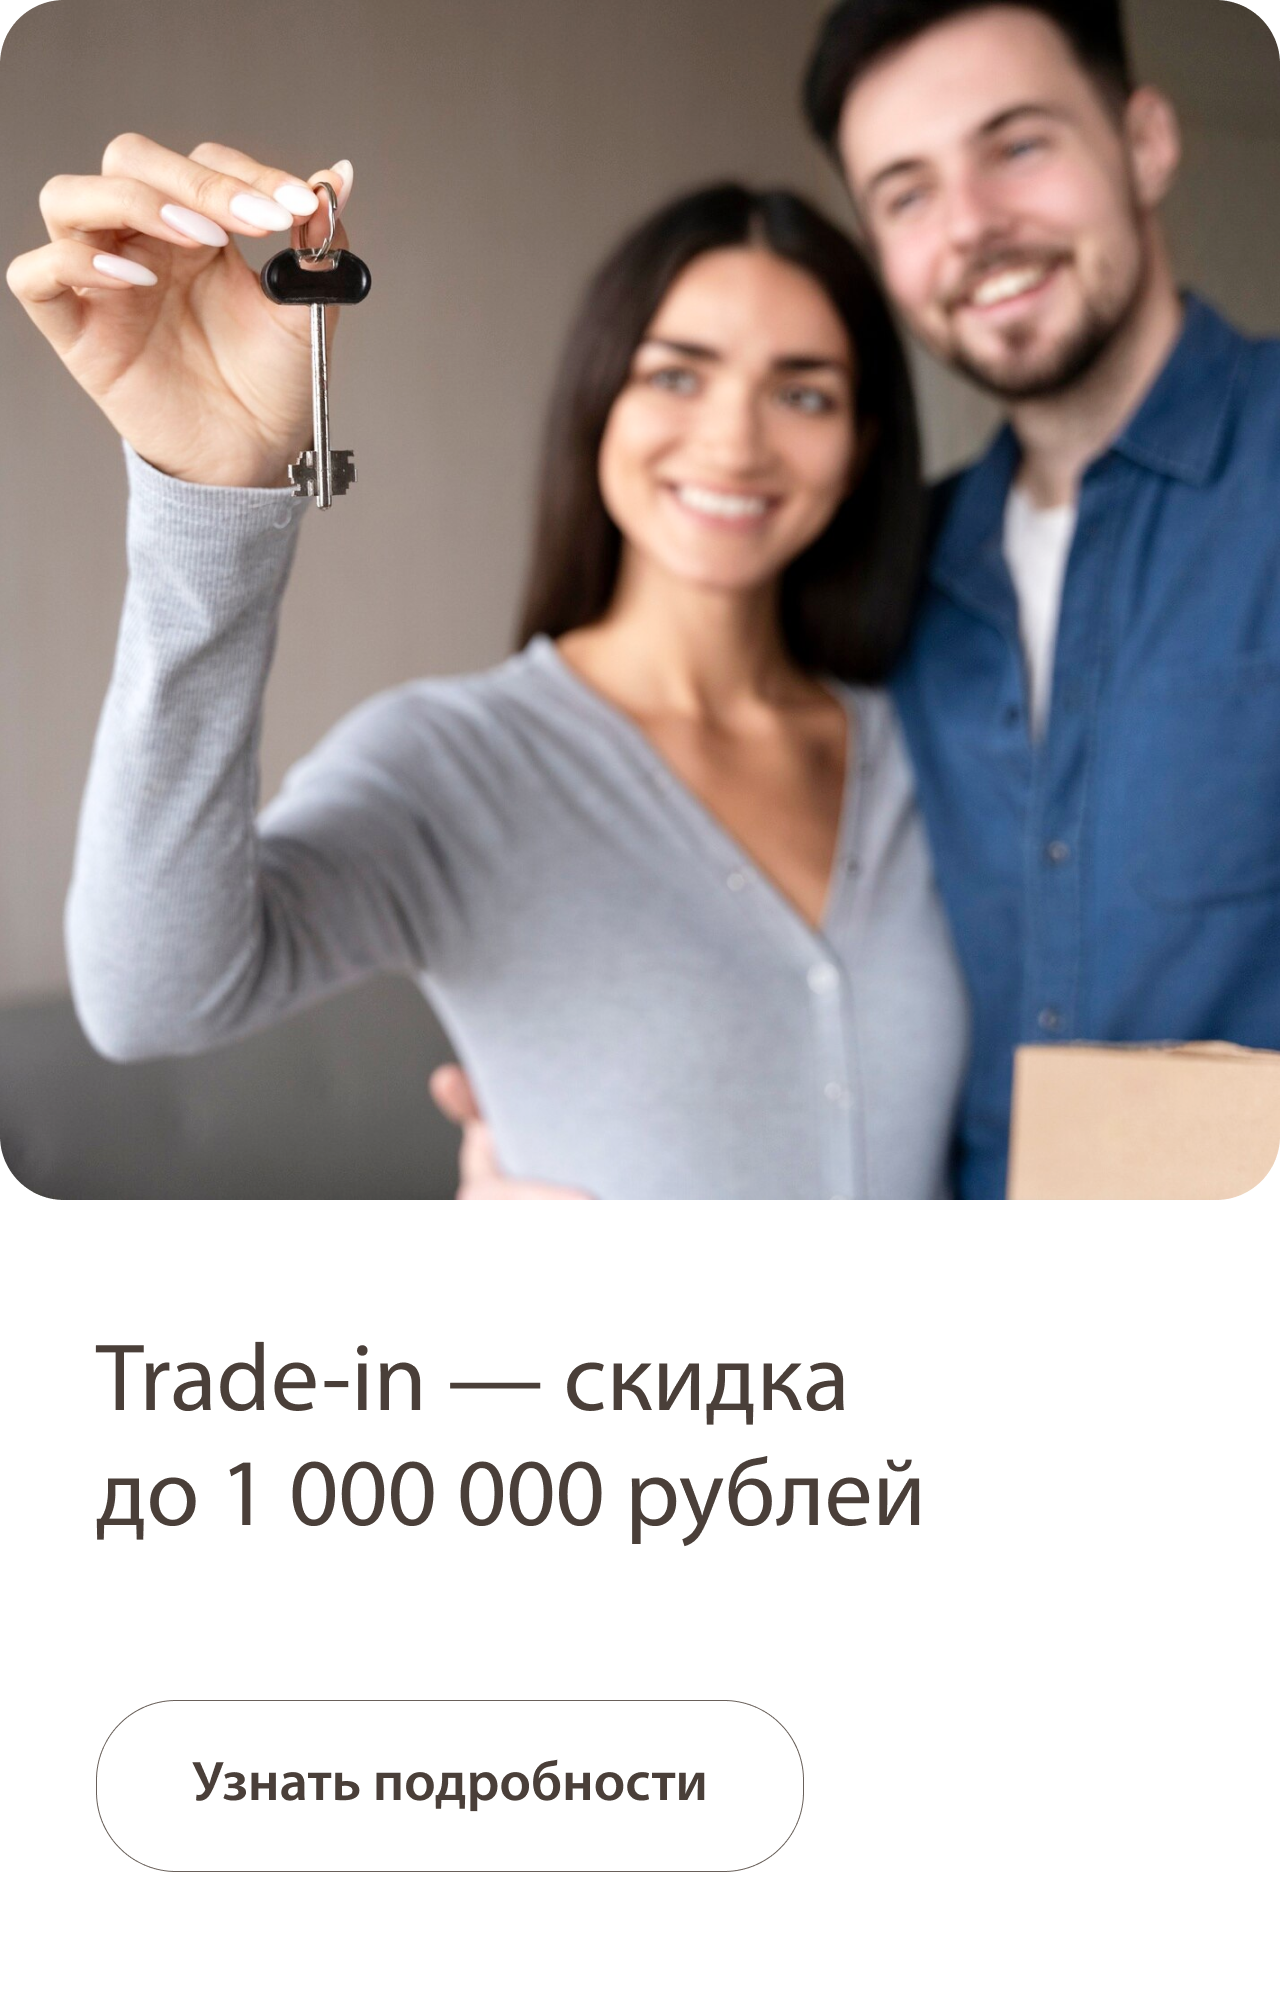 Trade-in — скидка до 1 000 000 рублей